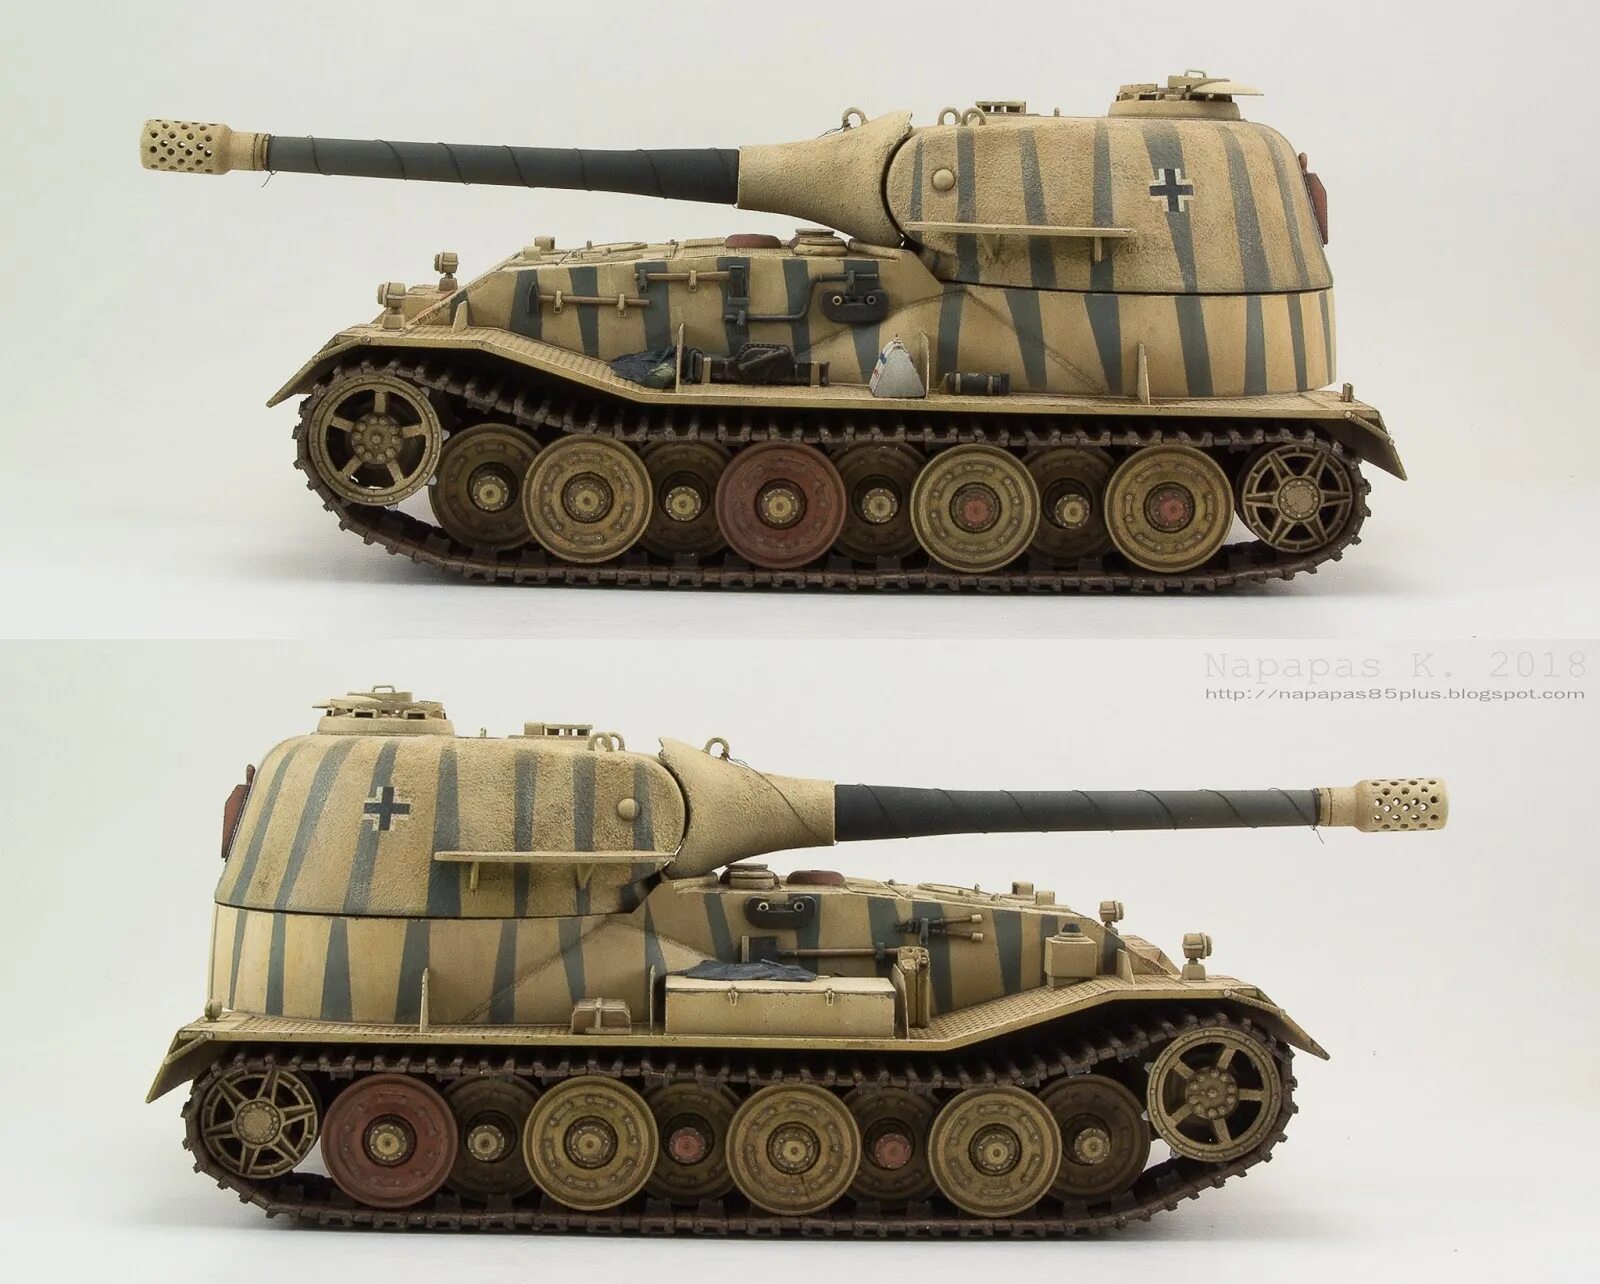 Vk7201 k Amusing Hobby. Vk7201 k. Amusing Hobby 1/35 Panzerkampfwagen vk7201(k). Танк vk7201 k 1/35. Vk projects